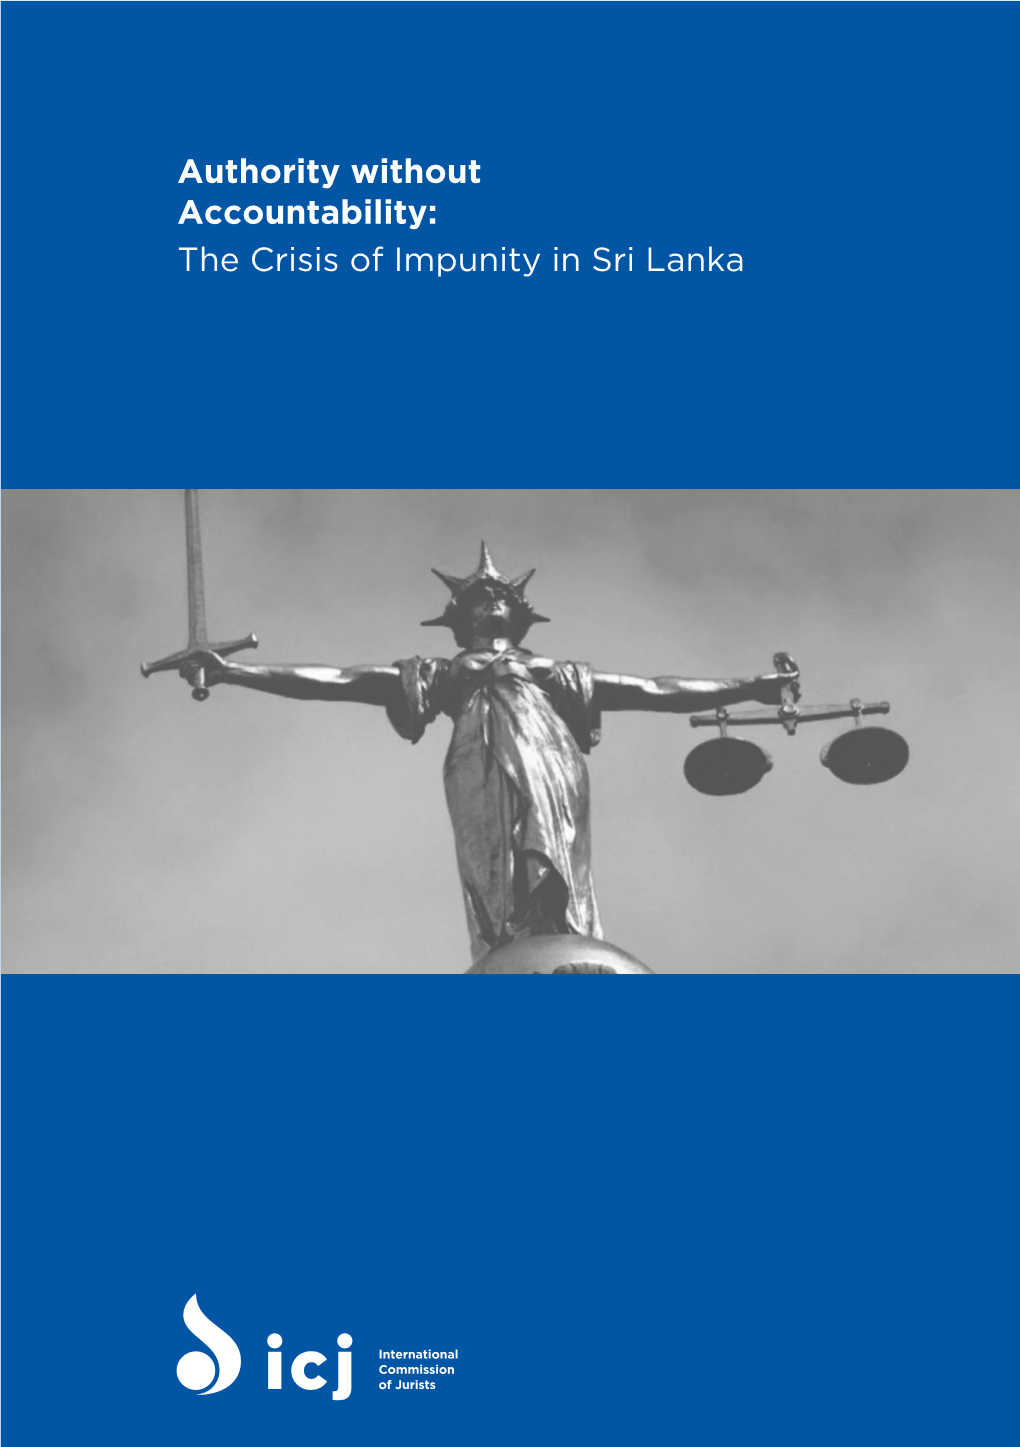 The Crisis of Impunity in Sri Lanka 2 Authority Without Accountability